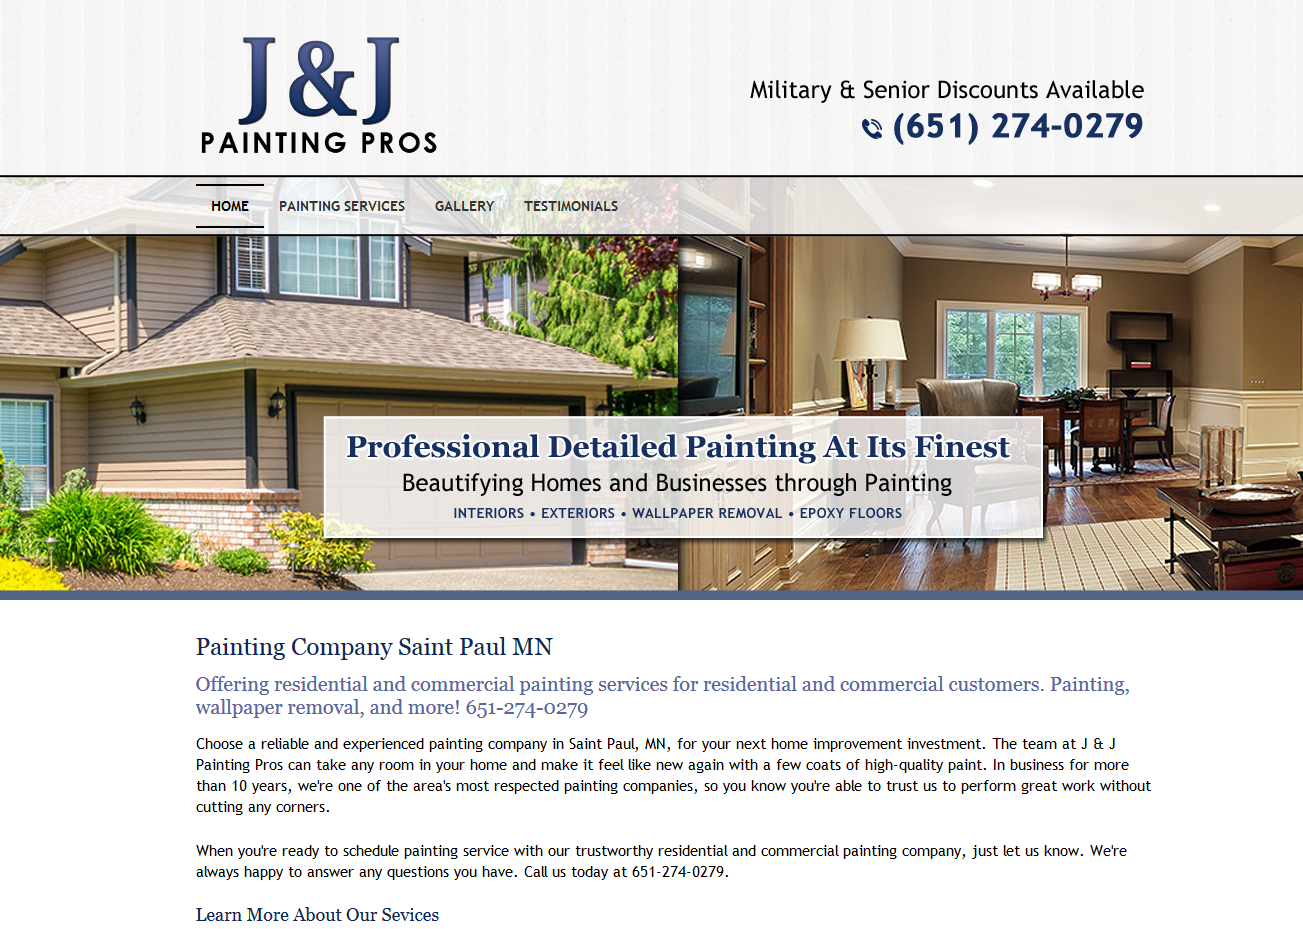 J & J Painting Pros